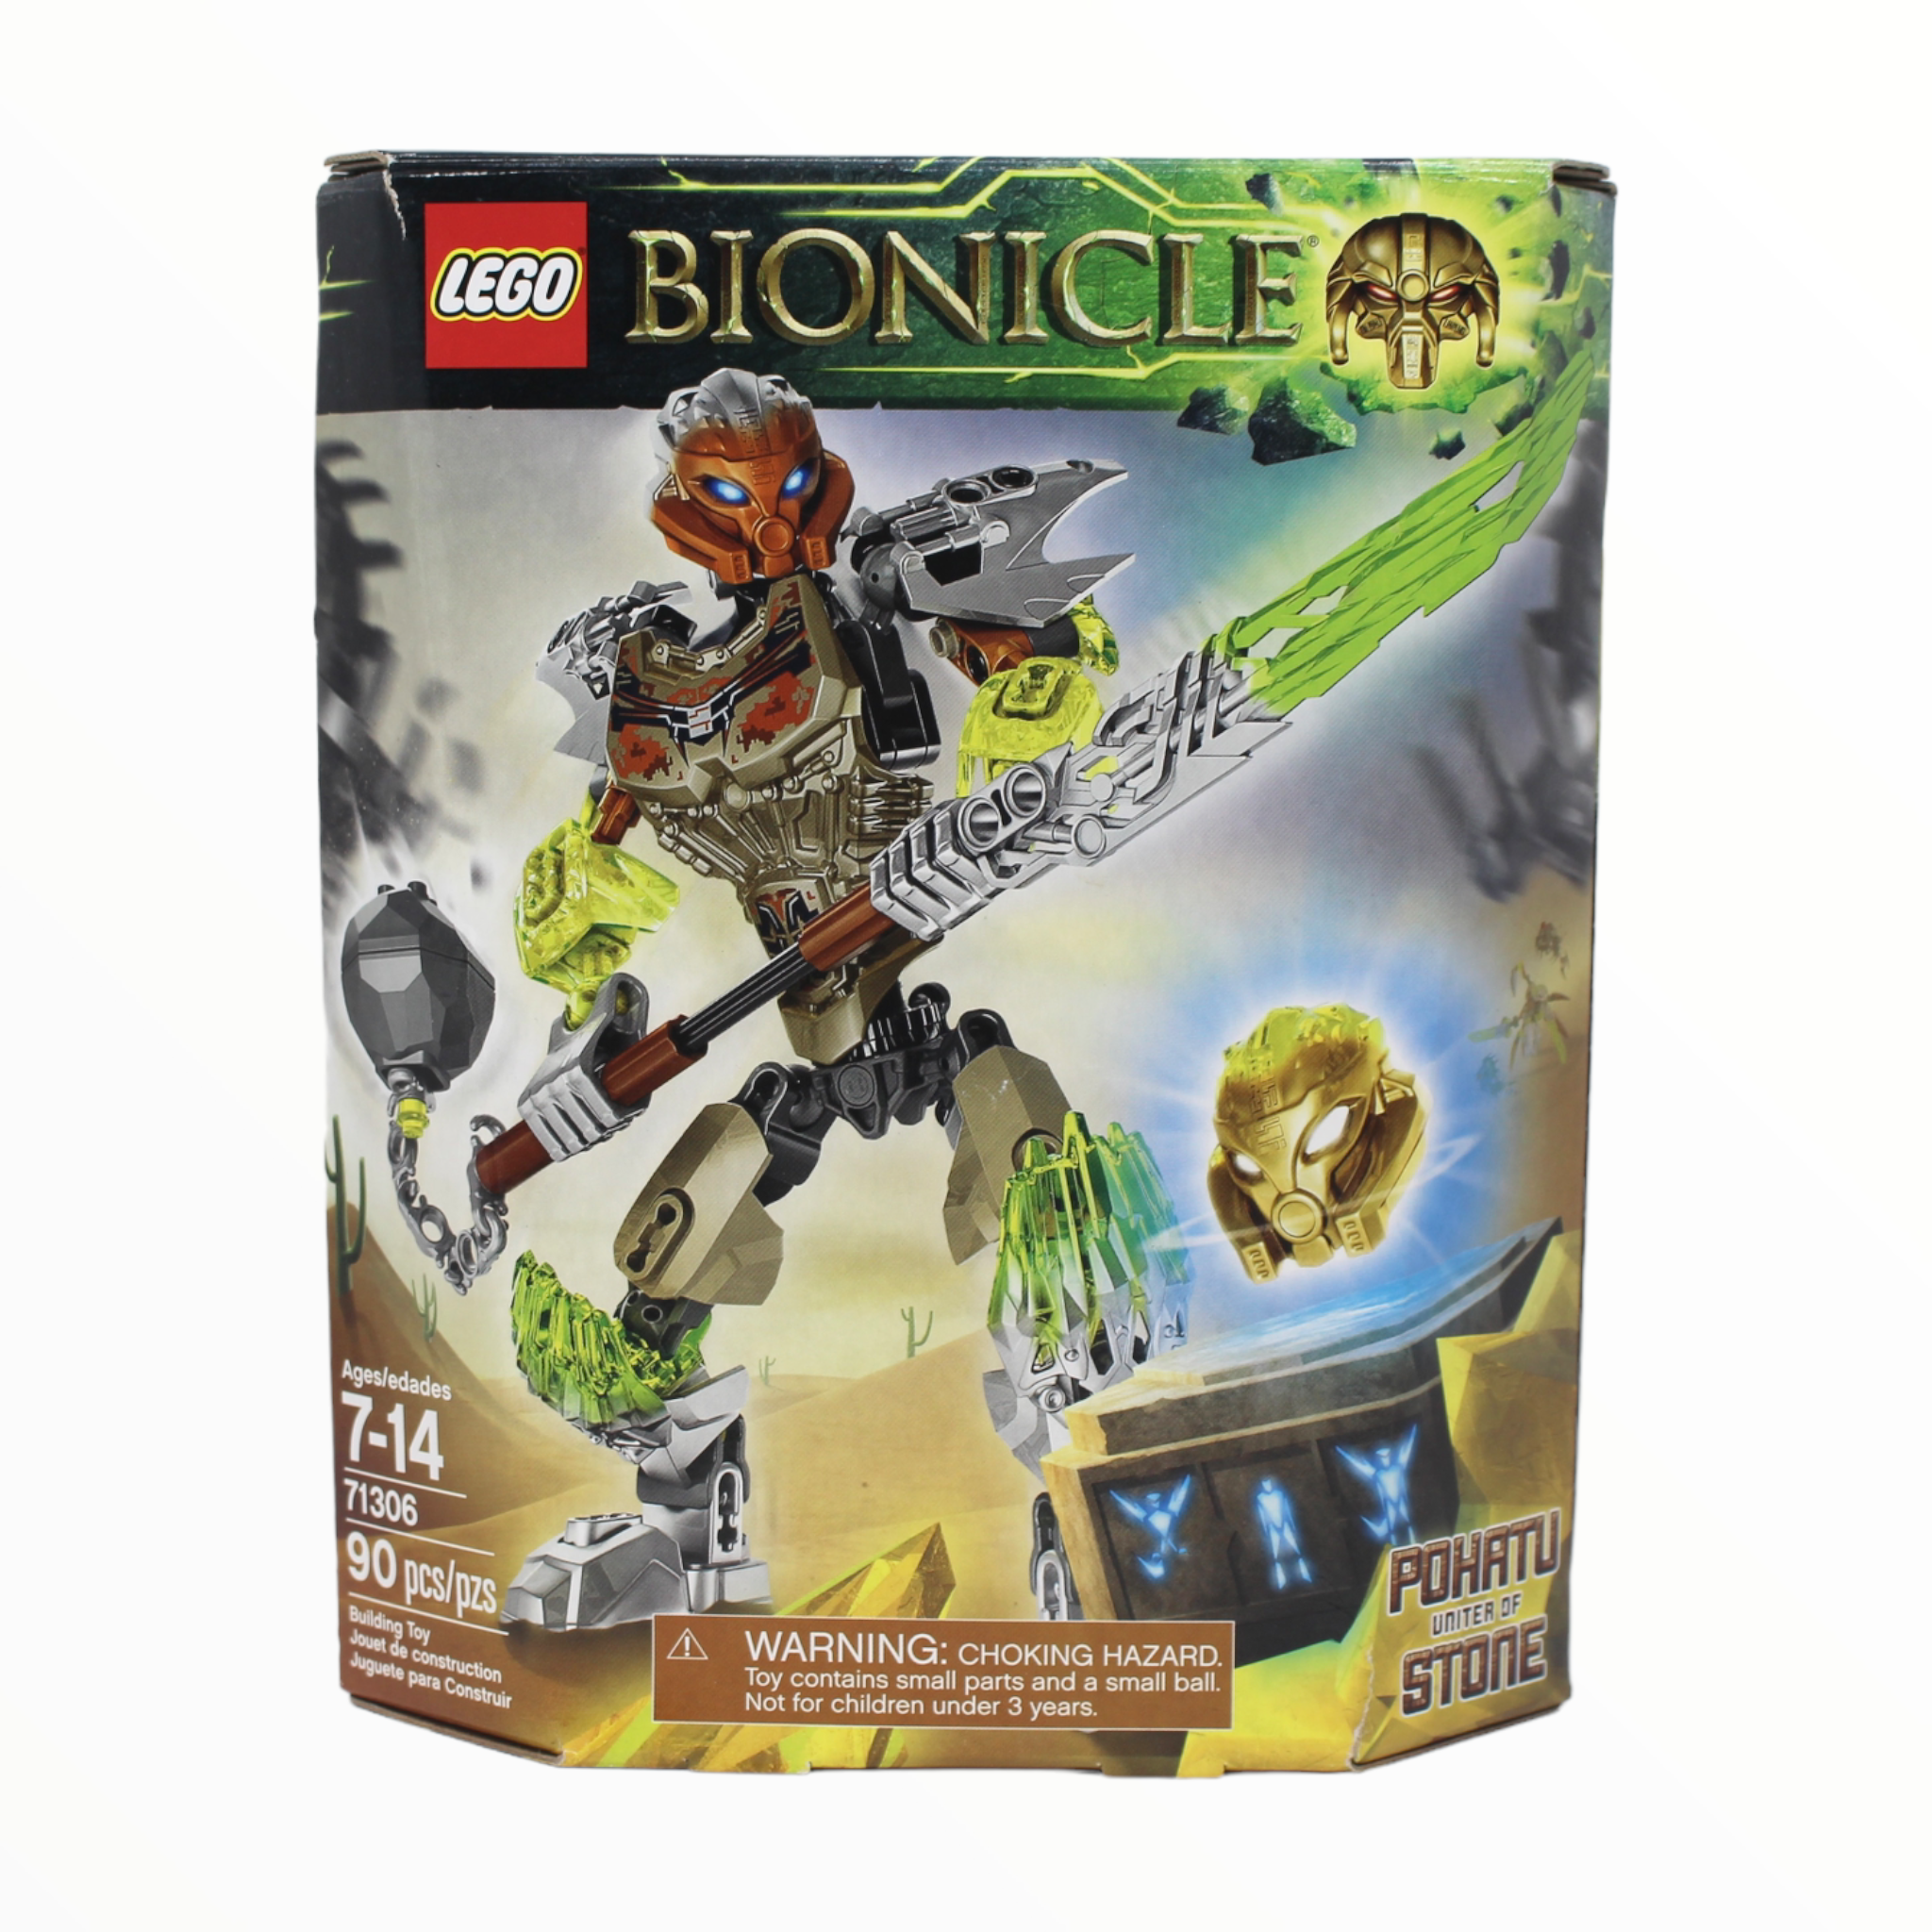 Certified Used Set 71306 Bionicle Pohatu Uniter of Stone